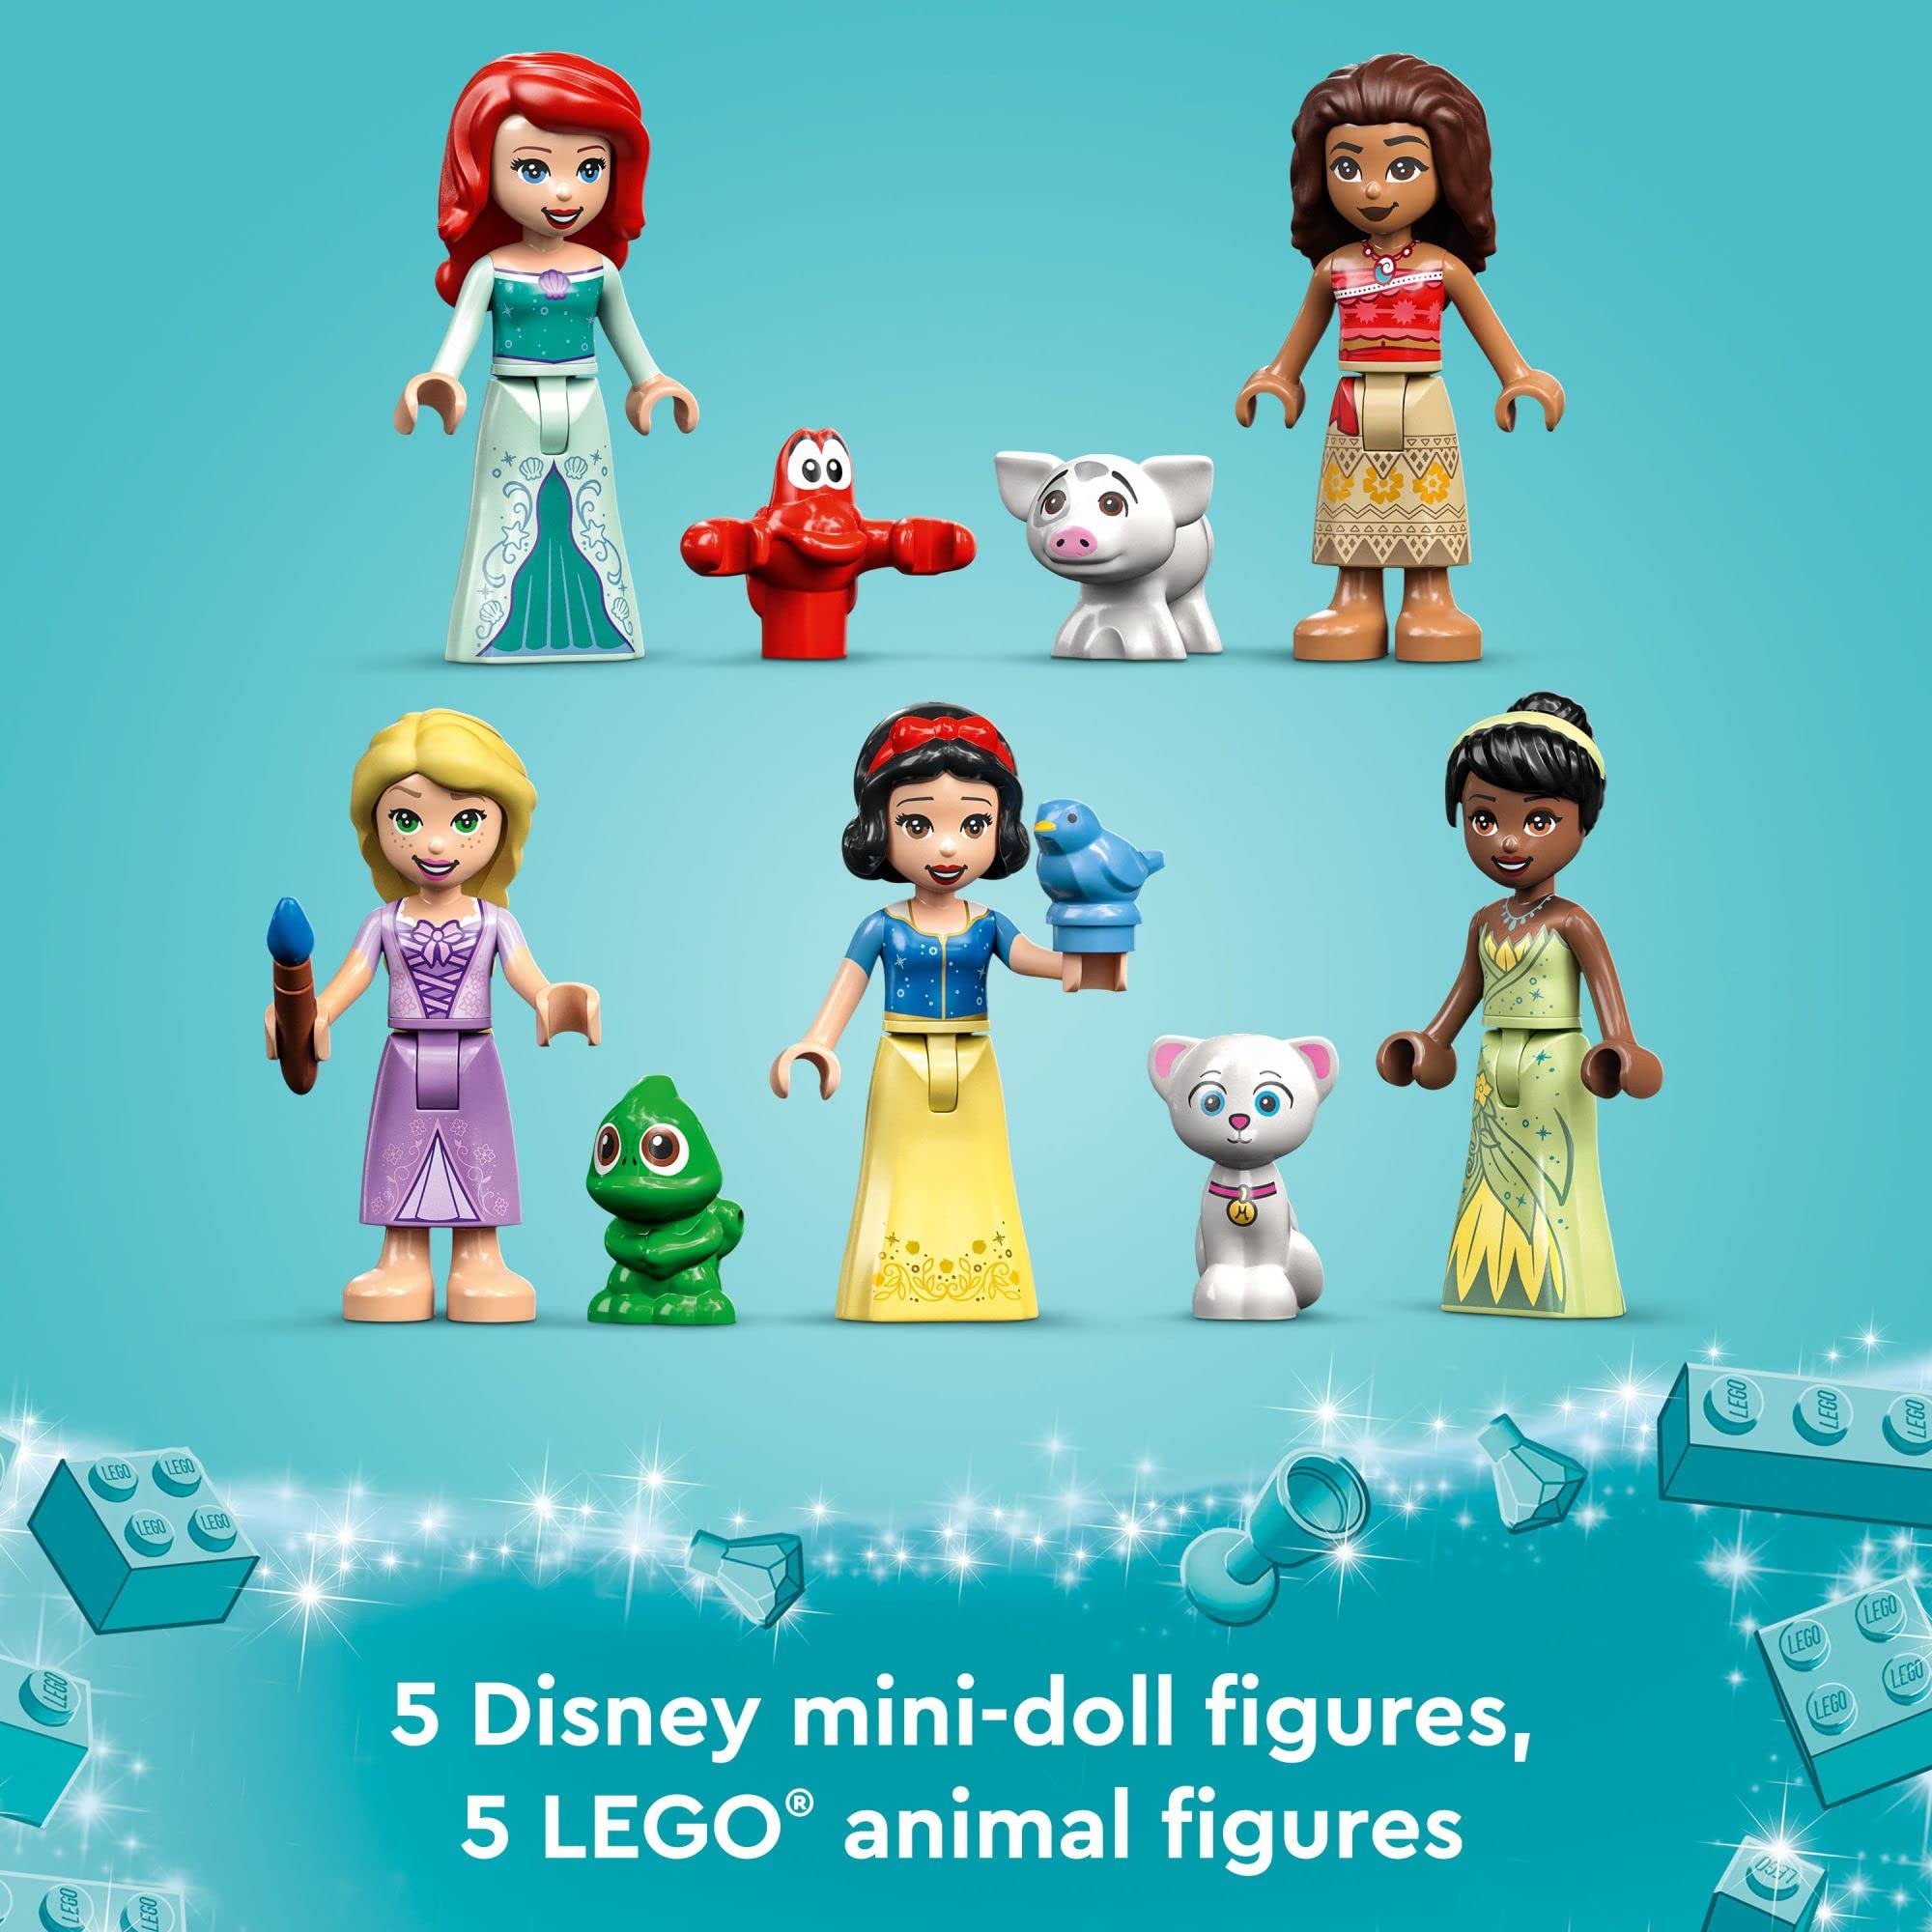 LEGO Disney Princess Ultimate Adventure Castle Building Toy 43205, Kids Can Build a Toy Disney Castle, Includes 5 Disney Princess Mini-Dolls, Ariel, Rapunzel and Snow White, Disney Gift for Boys Girls